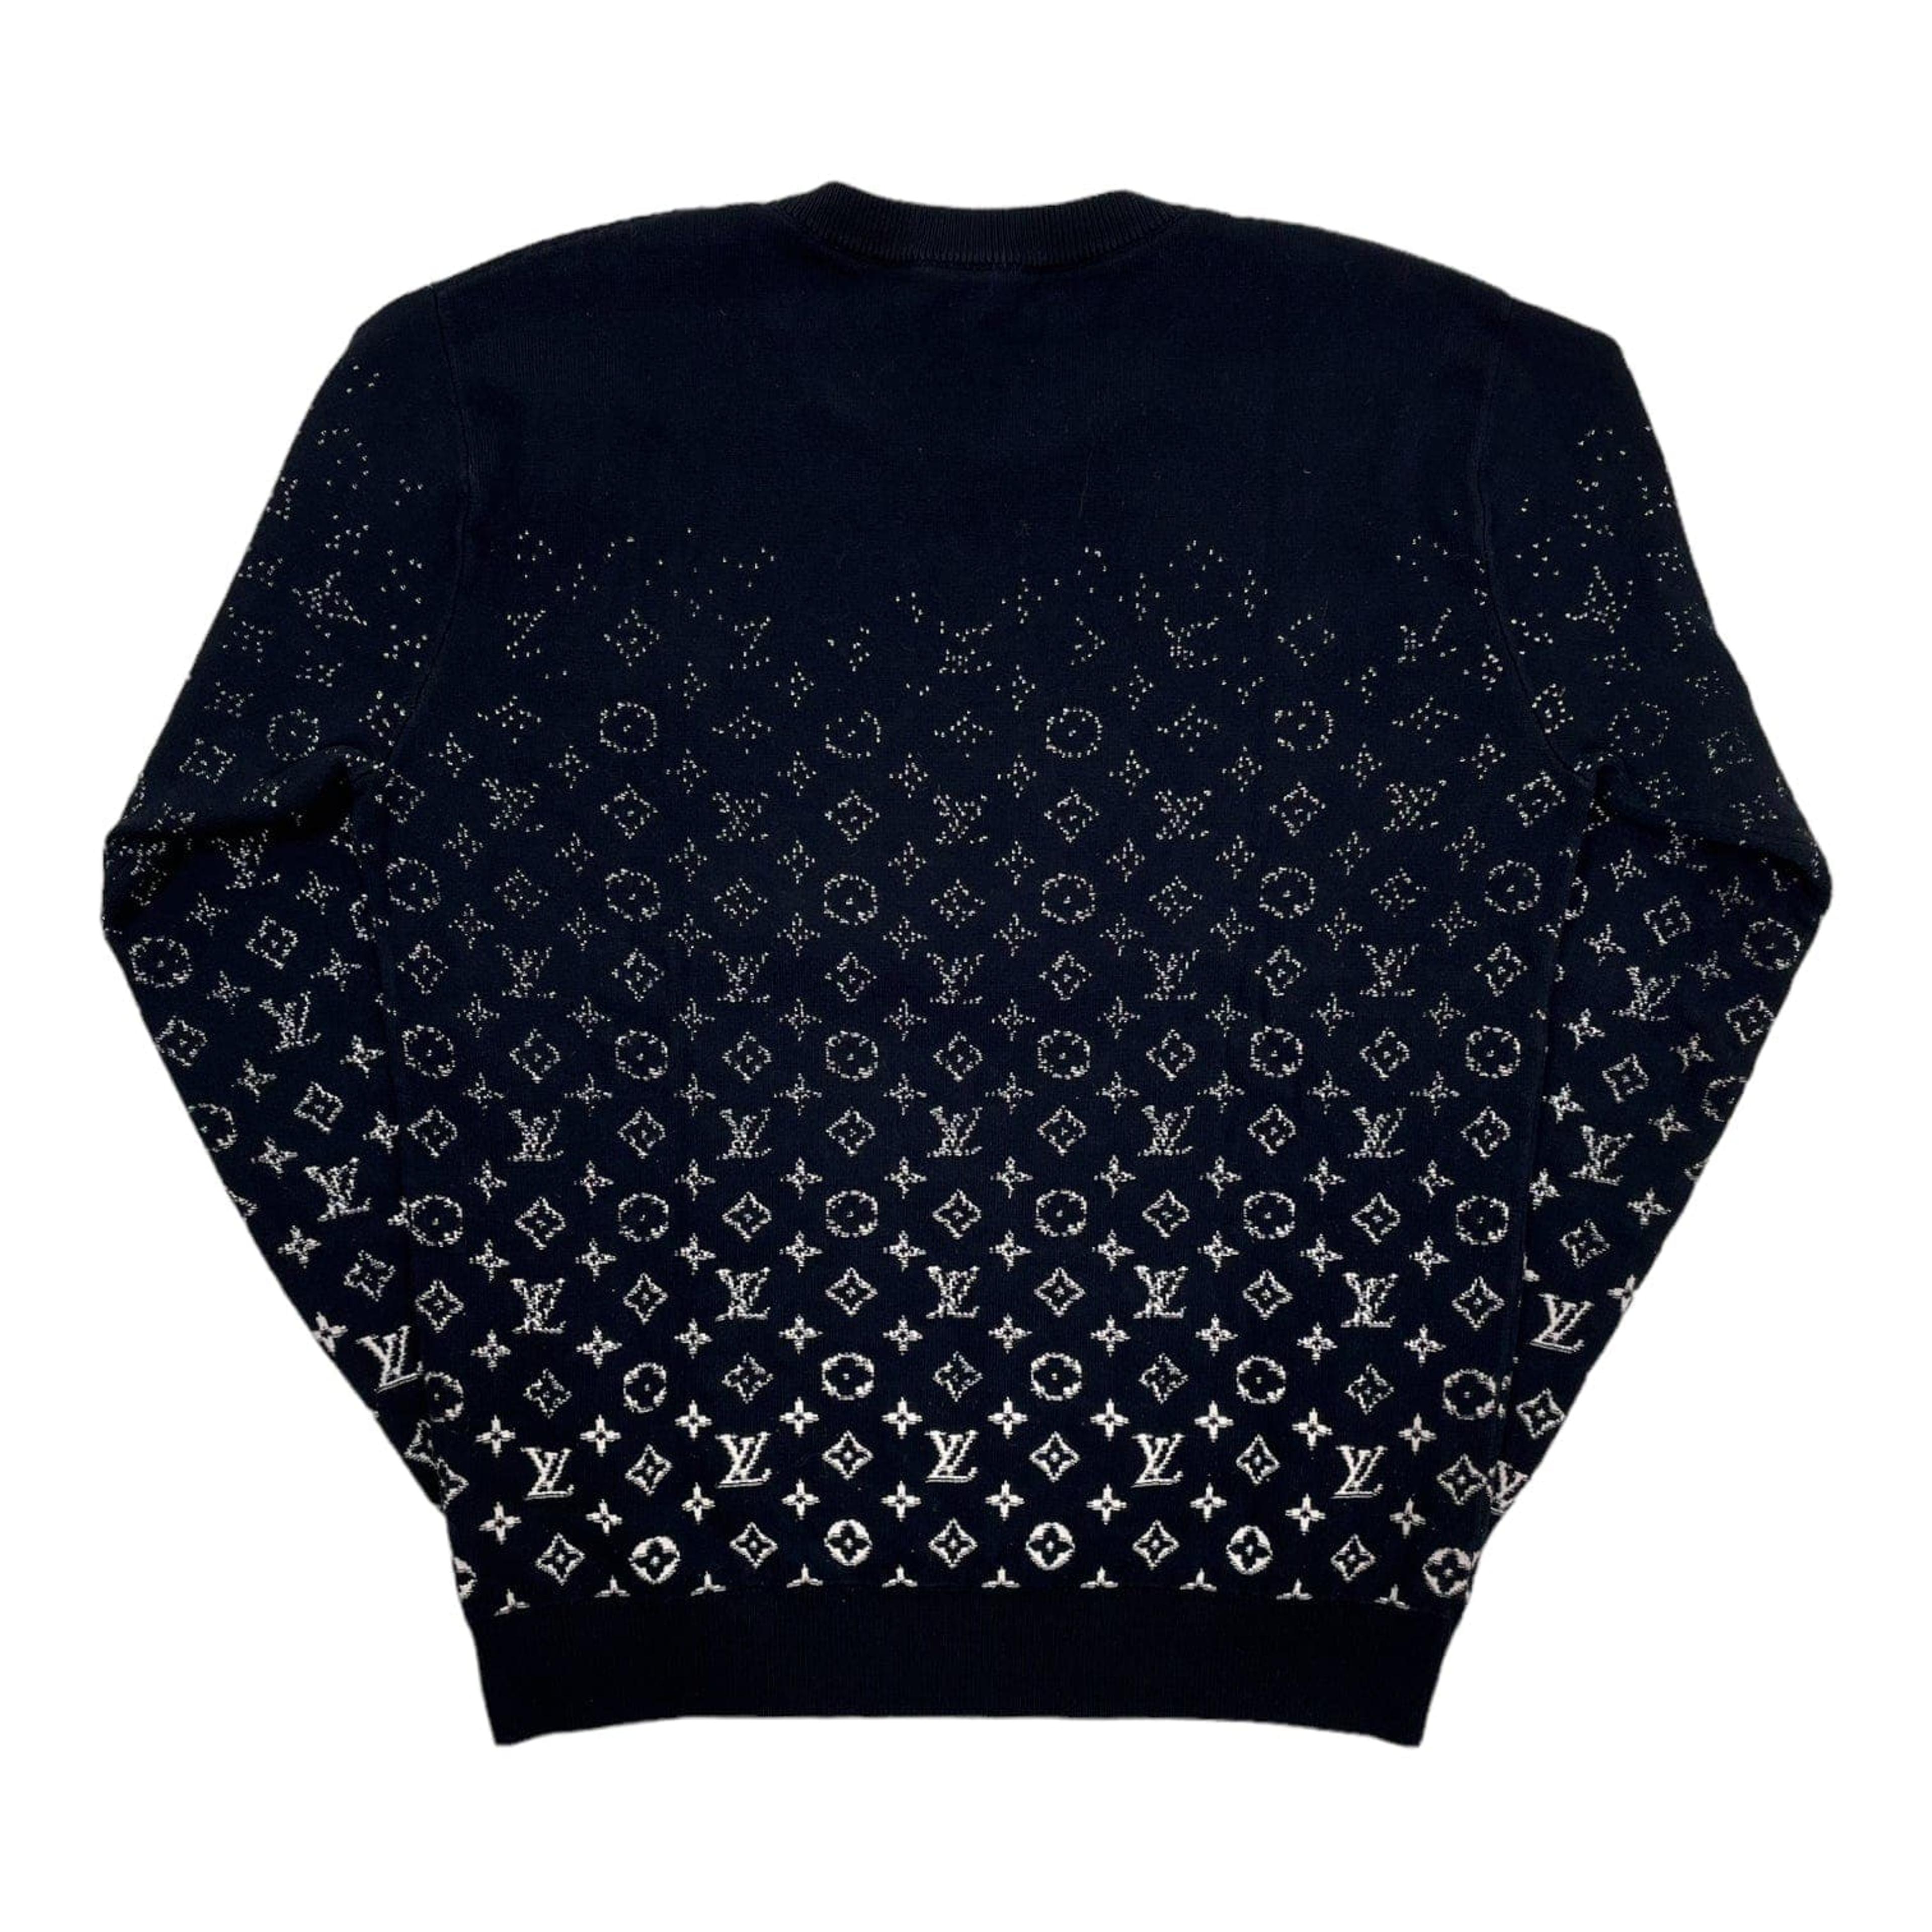 Alternate View 1 of Louis Vuitton Monogram Gradient Crewneck Sweatshirt Black Pre-Ow